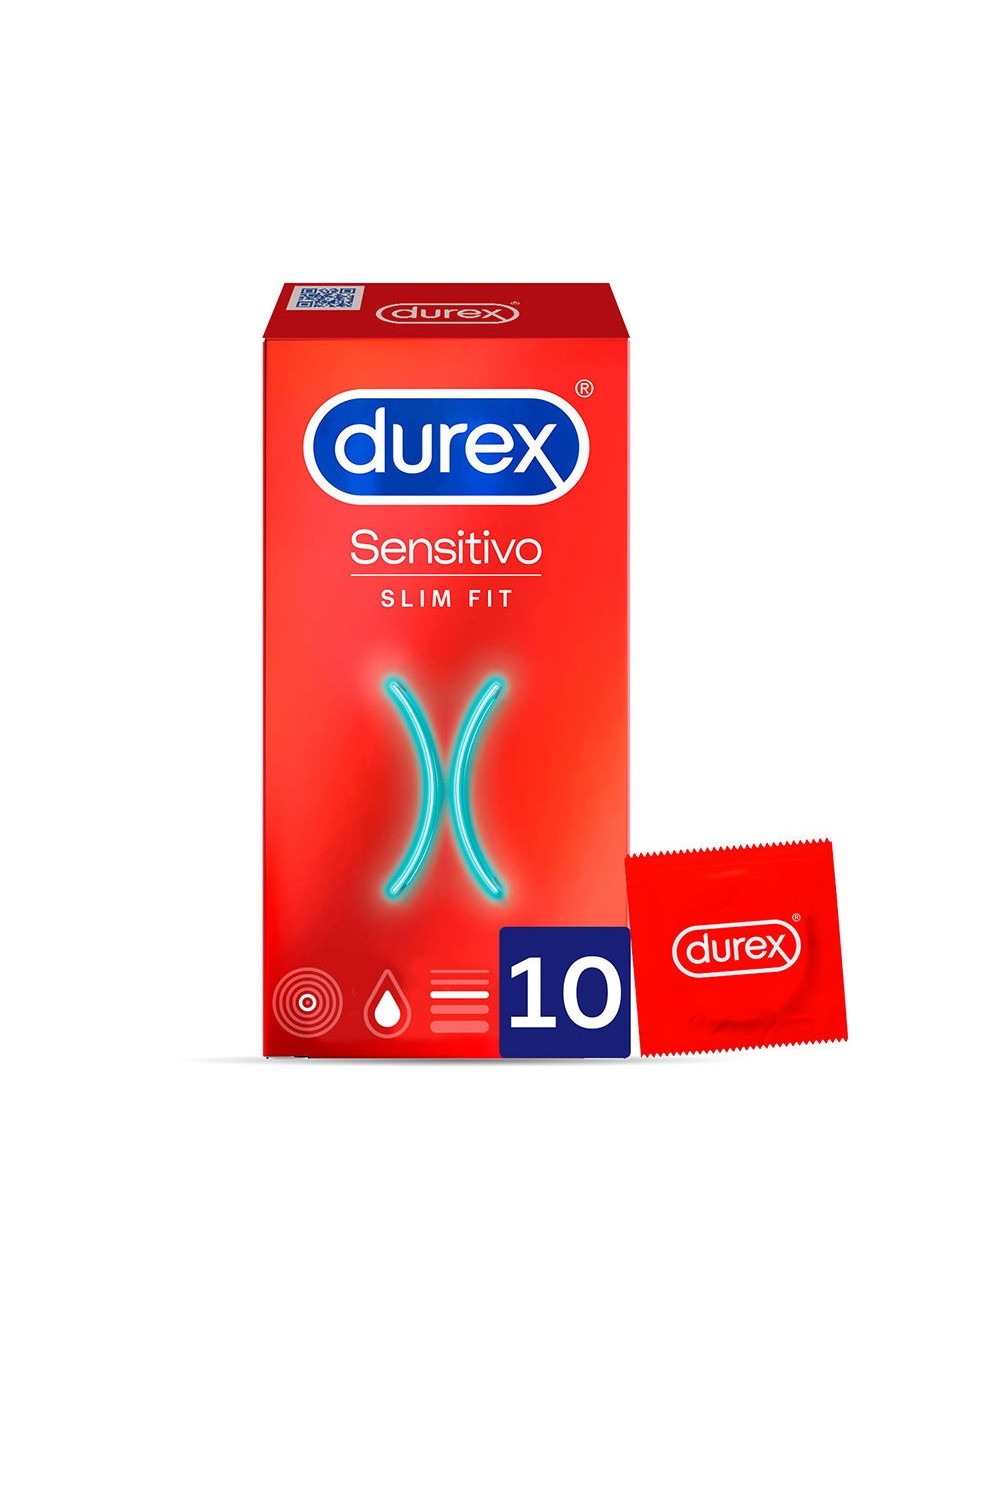 Durex Sensitive Slim Fit 10 Units